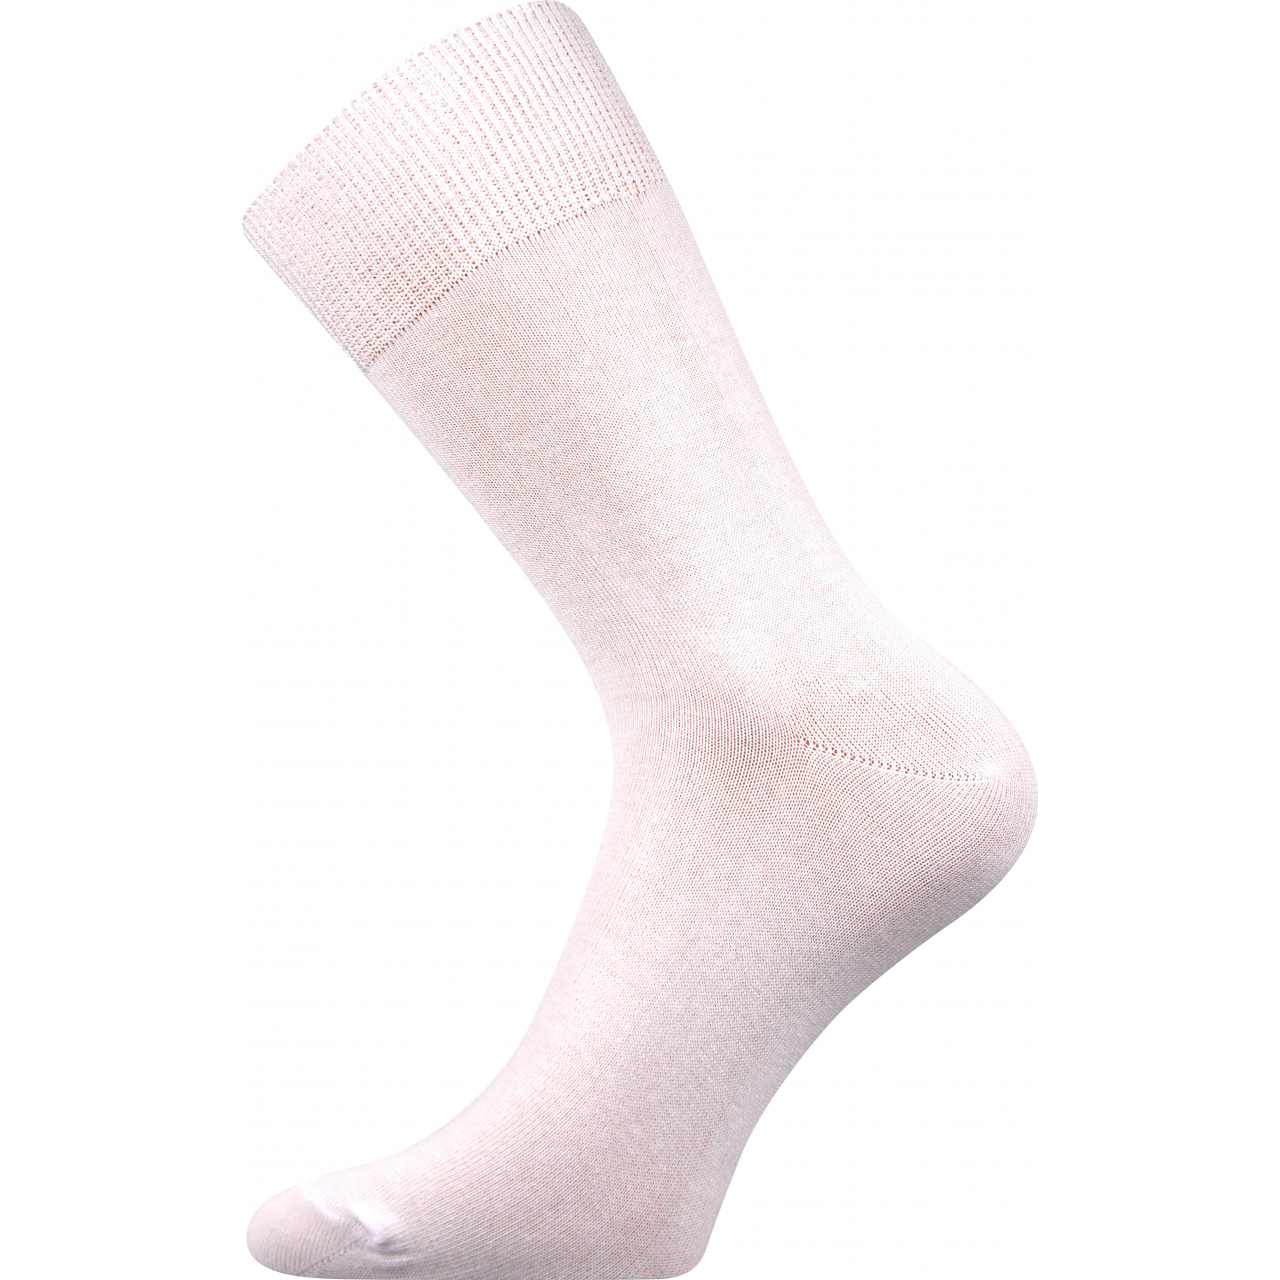 Ponožky unisex klasické Boma Radovan-a - bílé, 43-46